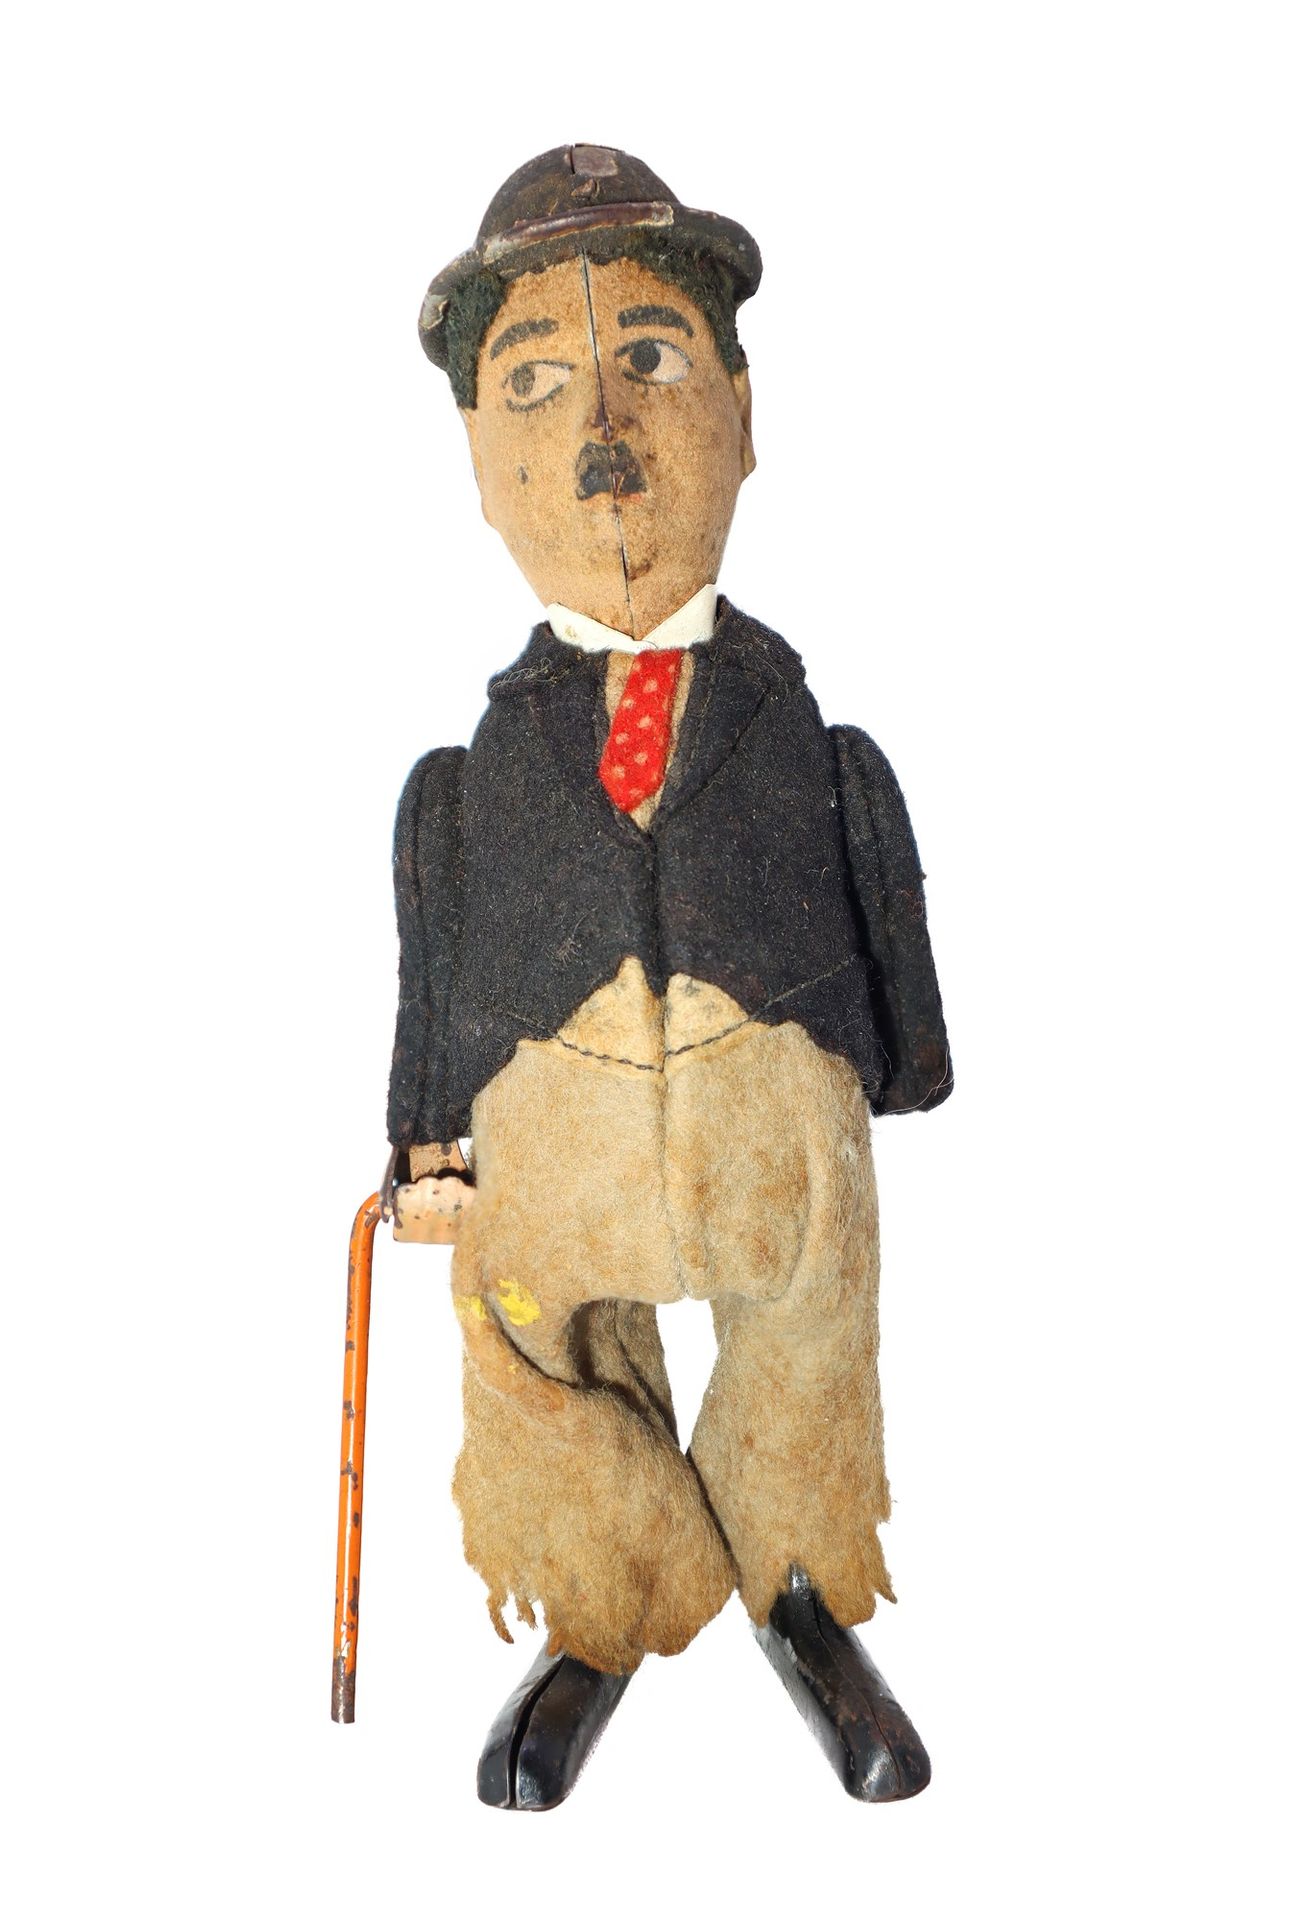 SCHUCO 查理-卓别林，1920年代，高17.5厘米 

舒科木偶，型号940，描绘了查理-卓别林的《小流浪汉》。该木偶制作于20世纪20年代，由锡制成，上&hellip;